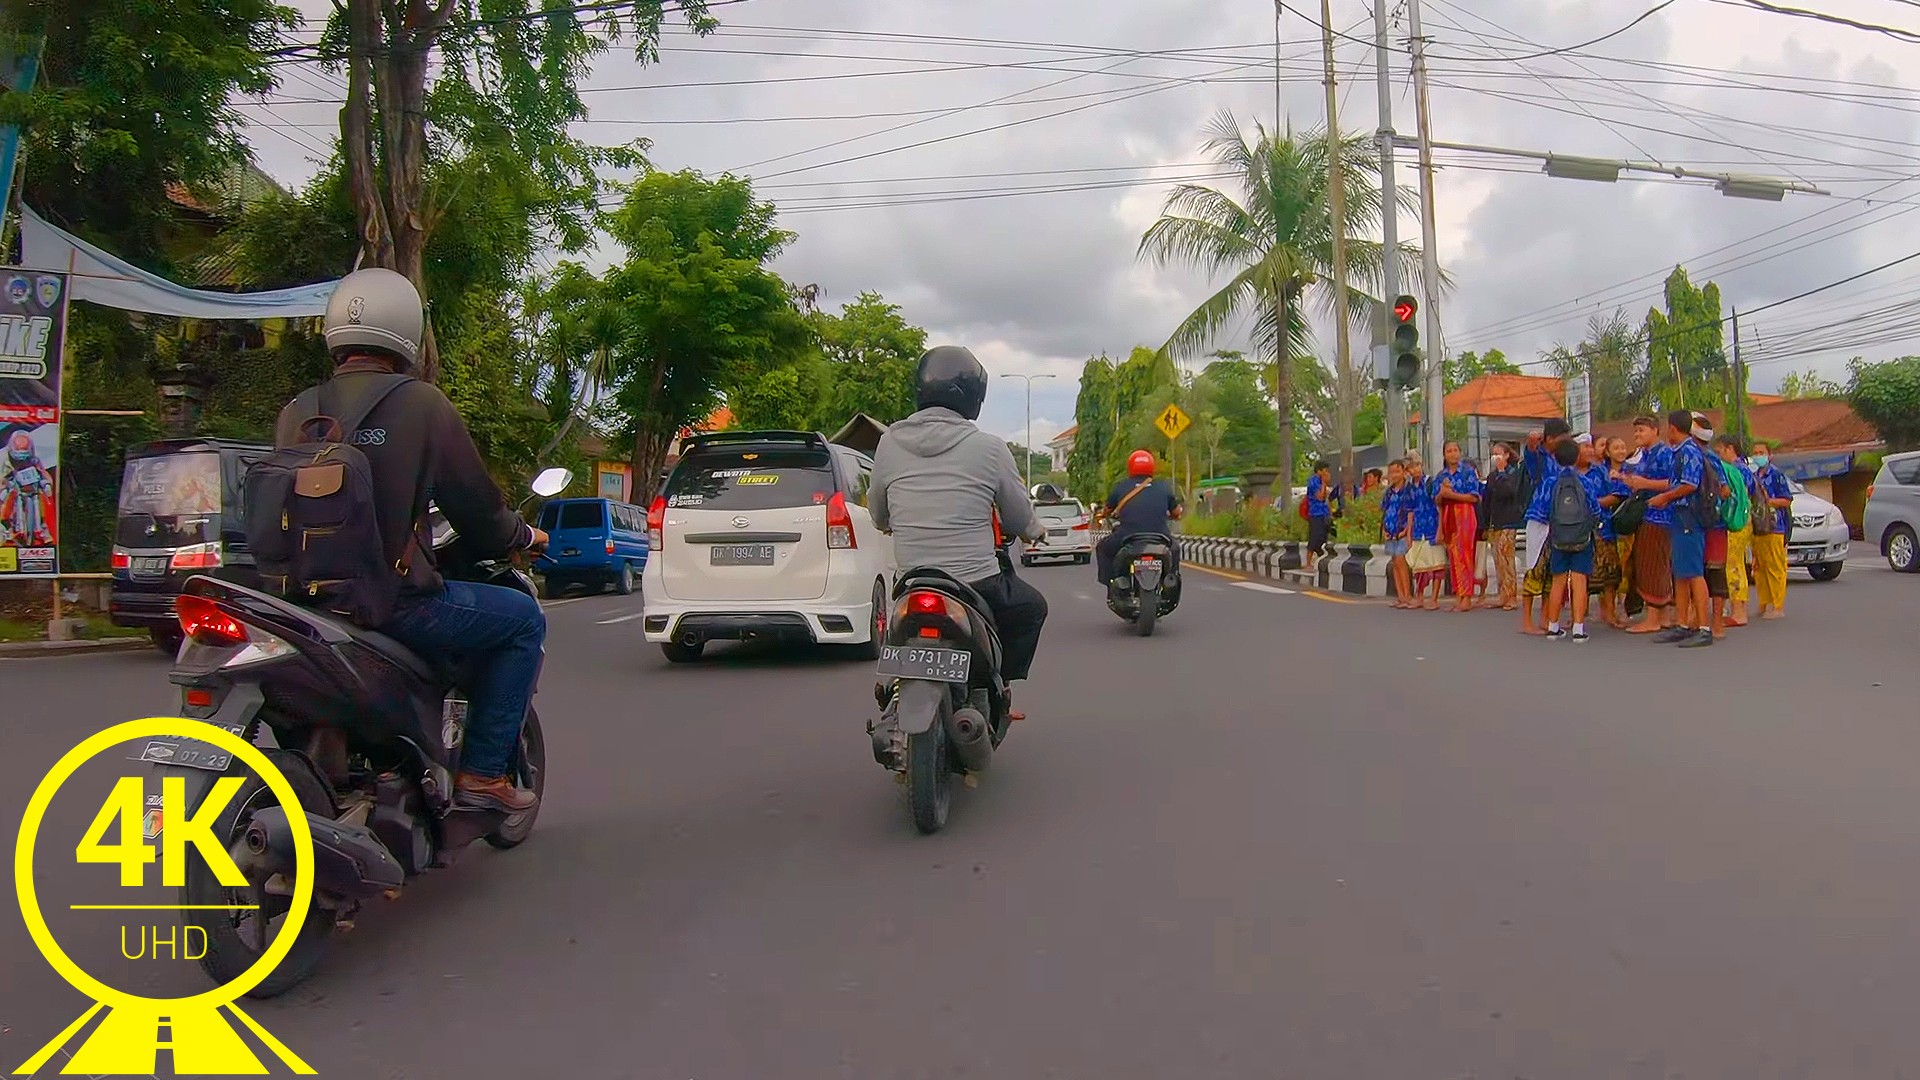 Roads of Bali, Indonesia PART 2